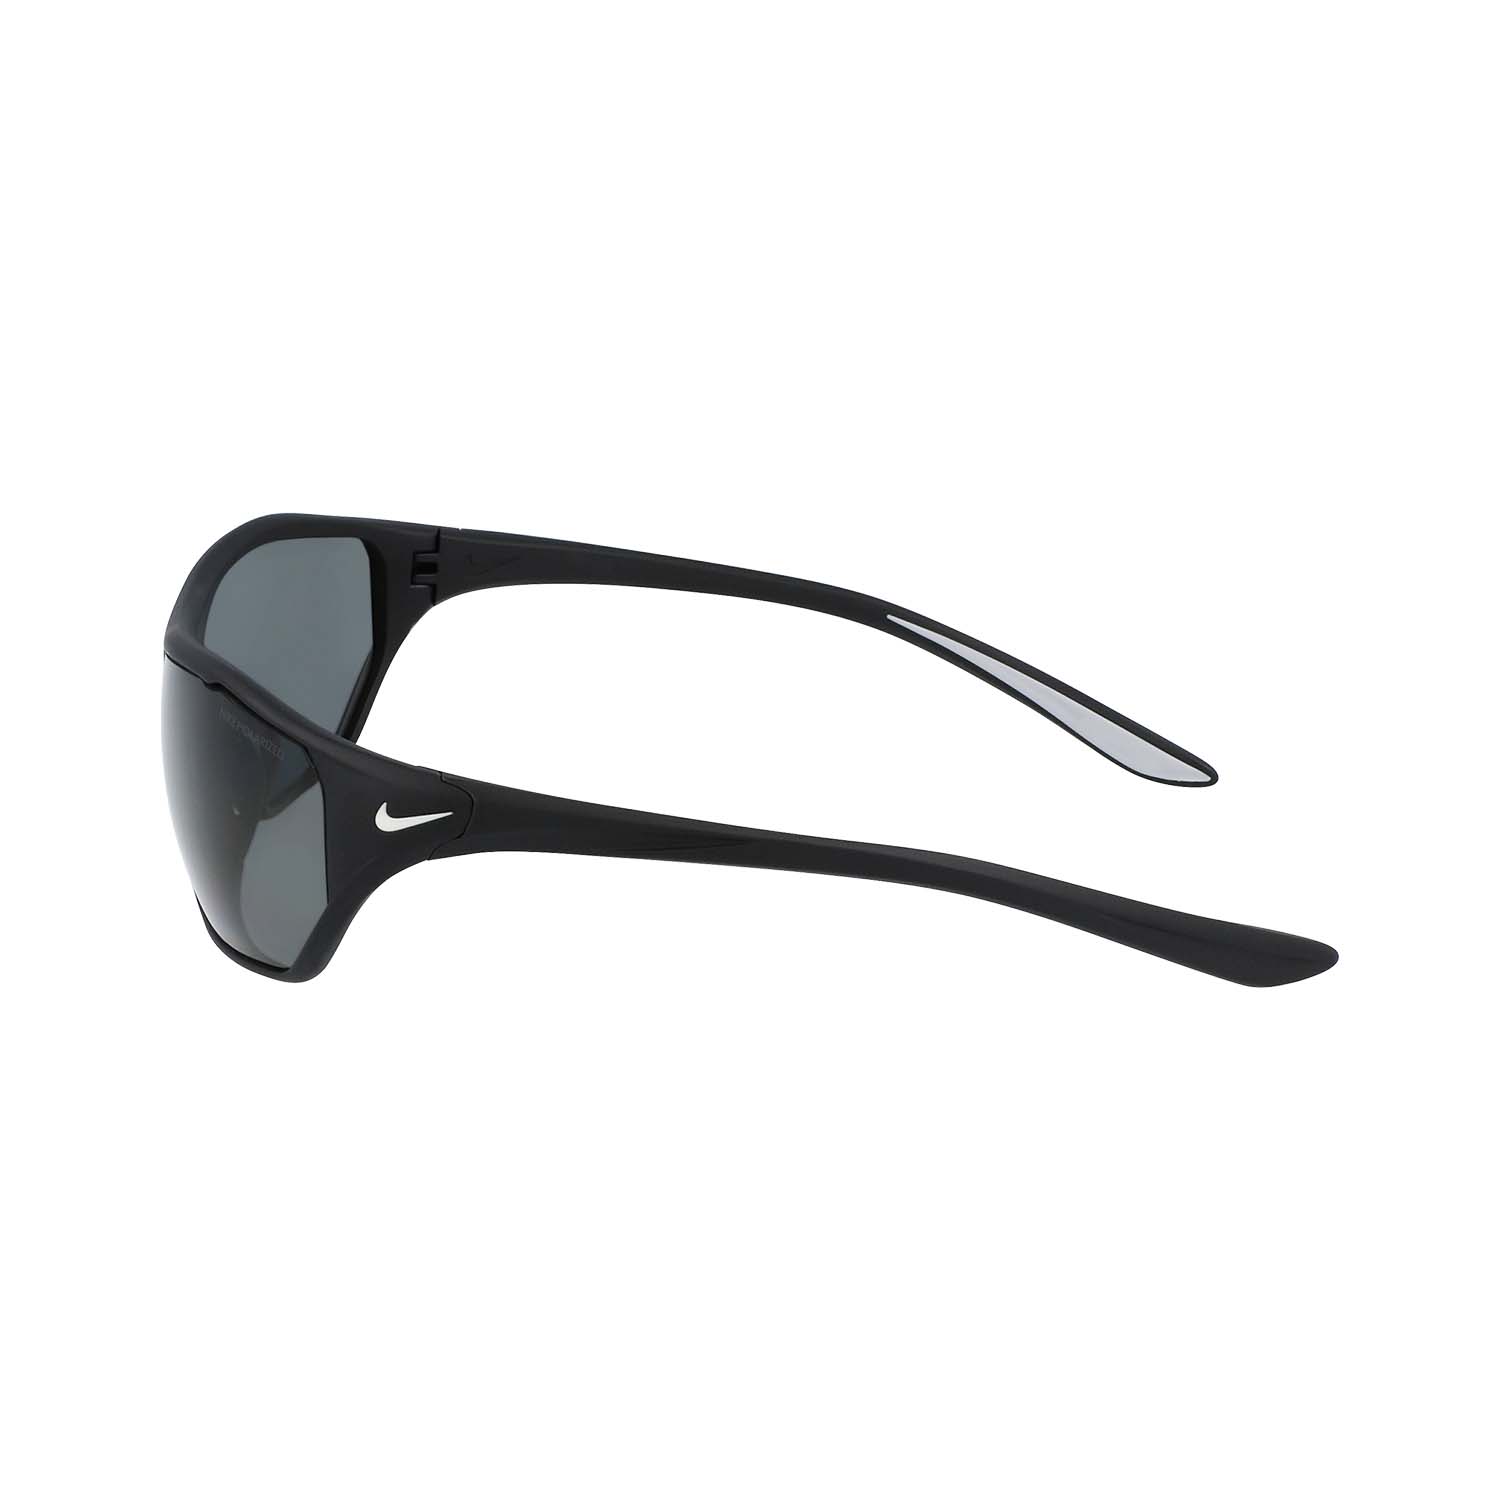 Nike Aero Drift Sunglasses - Matte Black/Polarized Grey